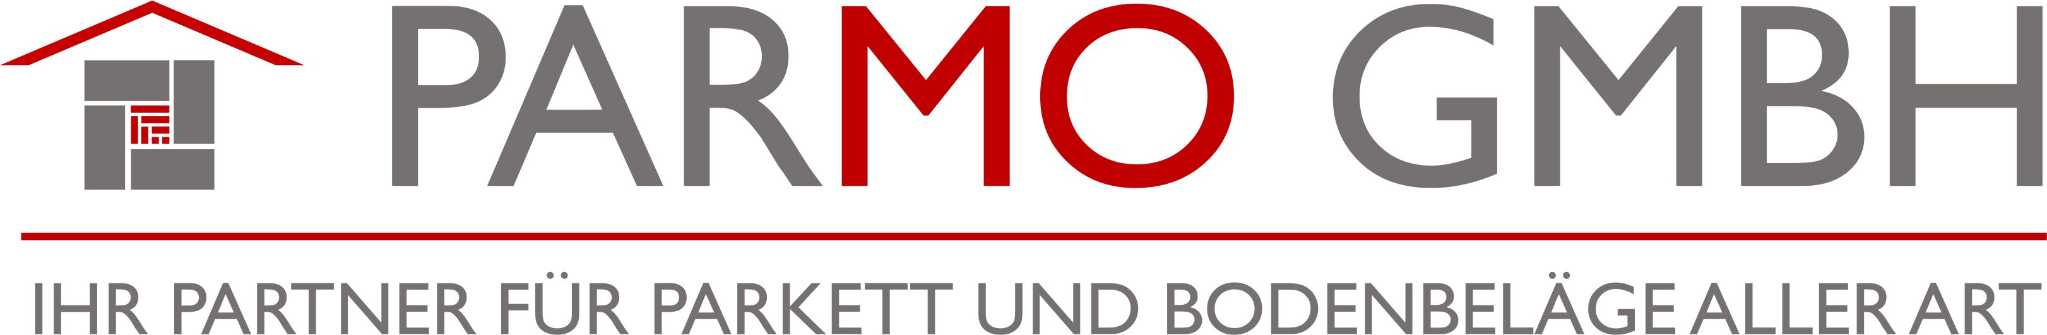 PARMO GmbH